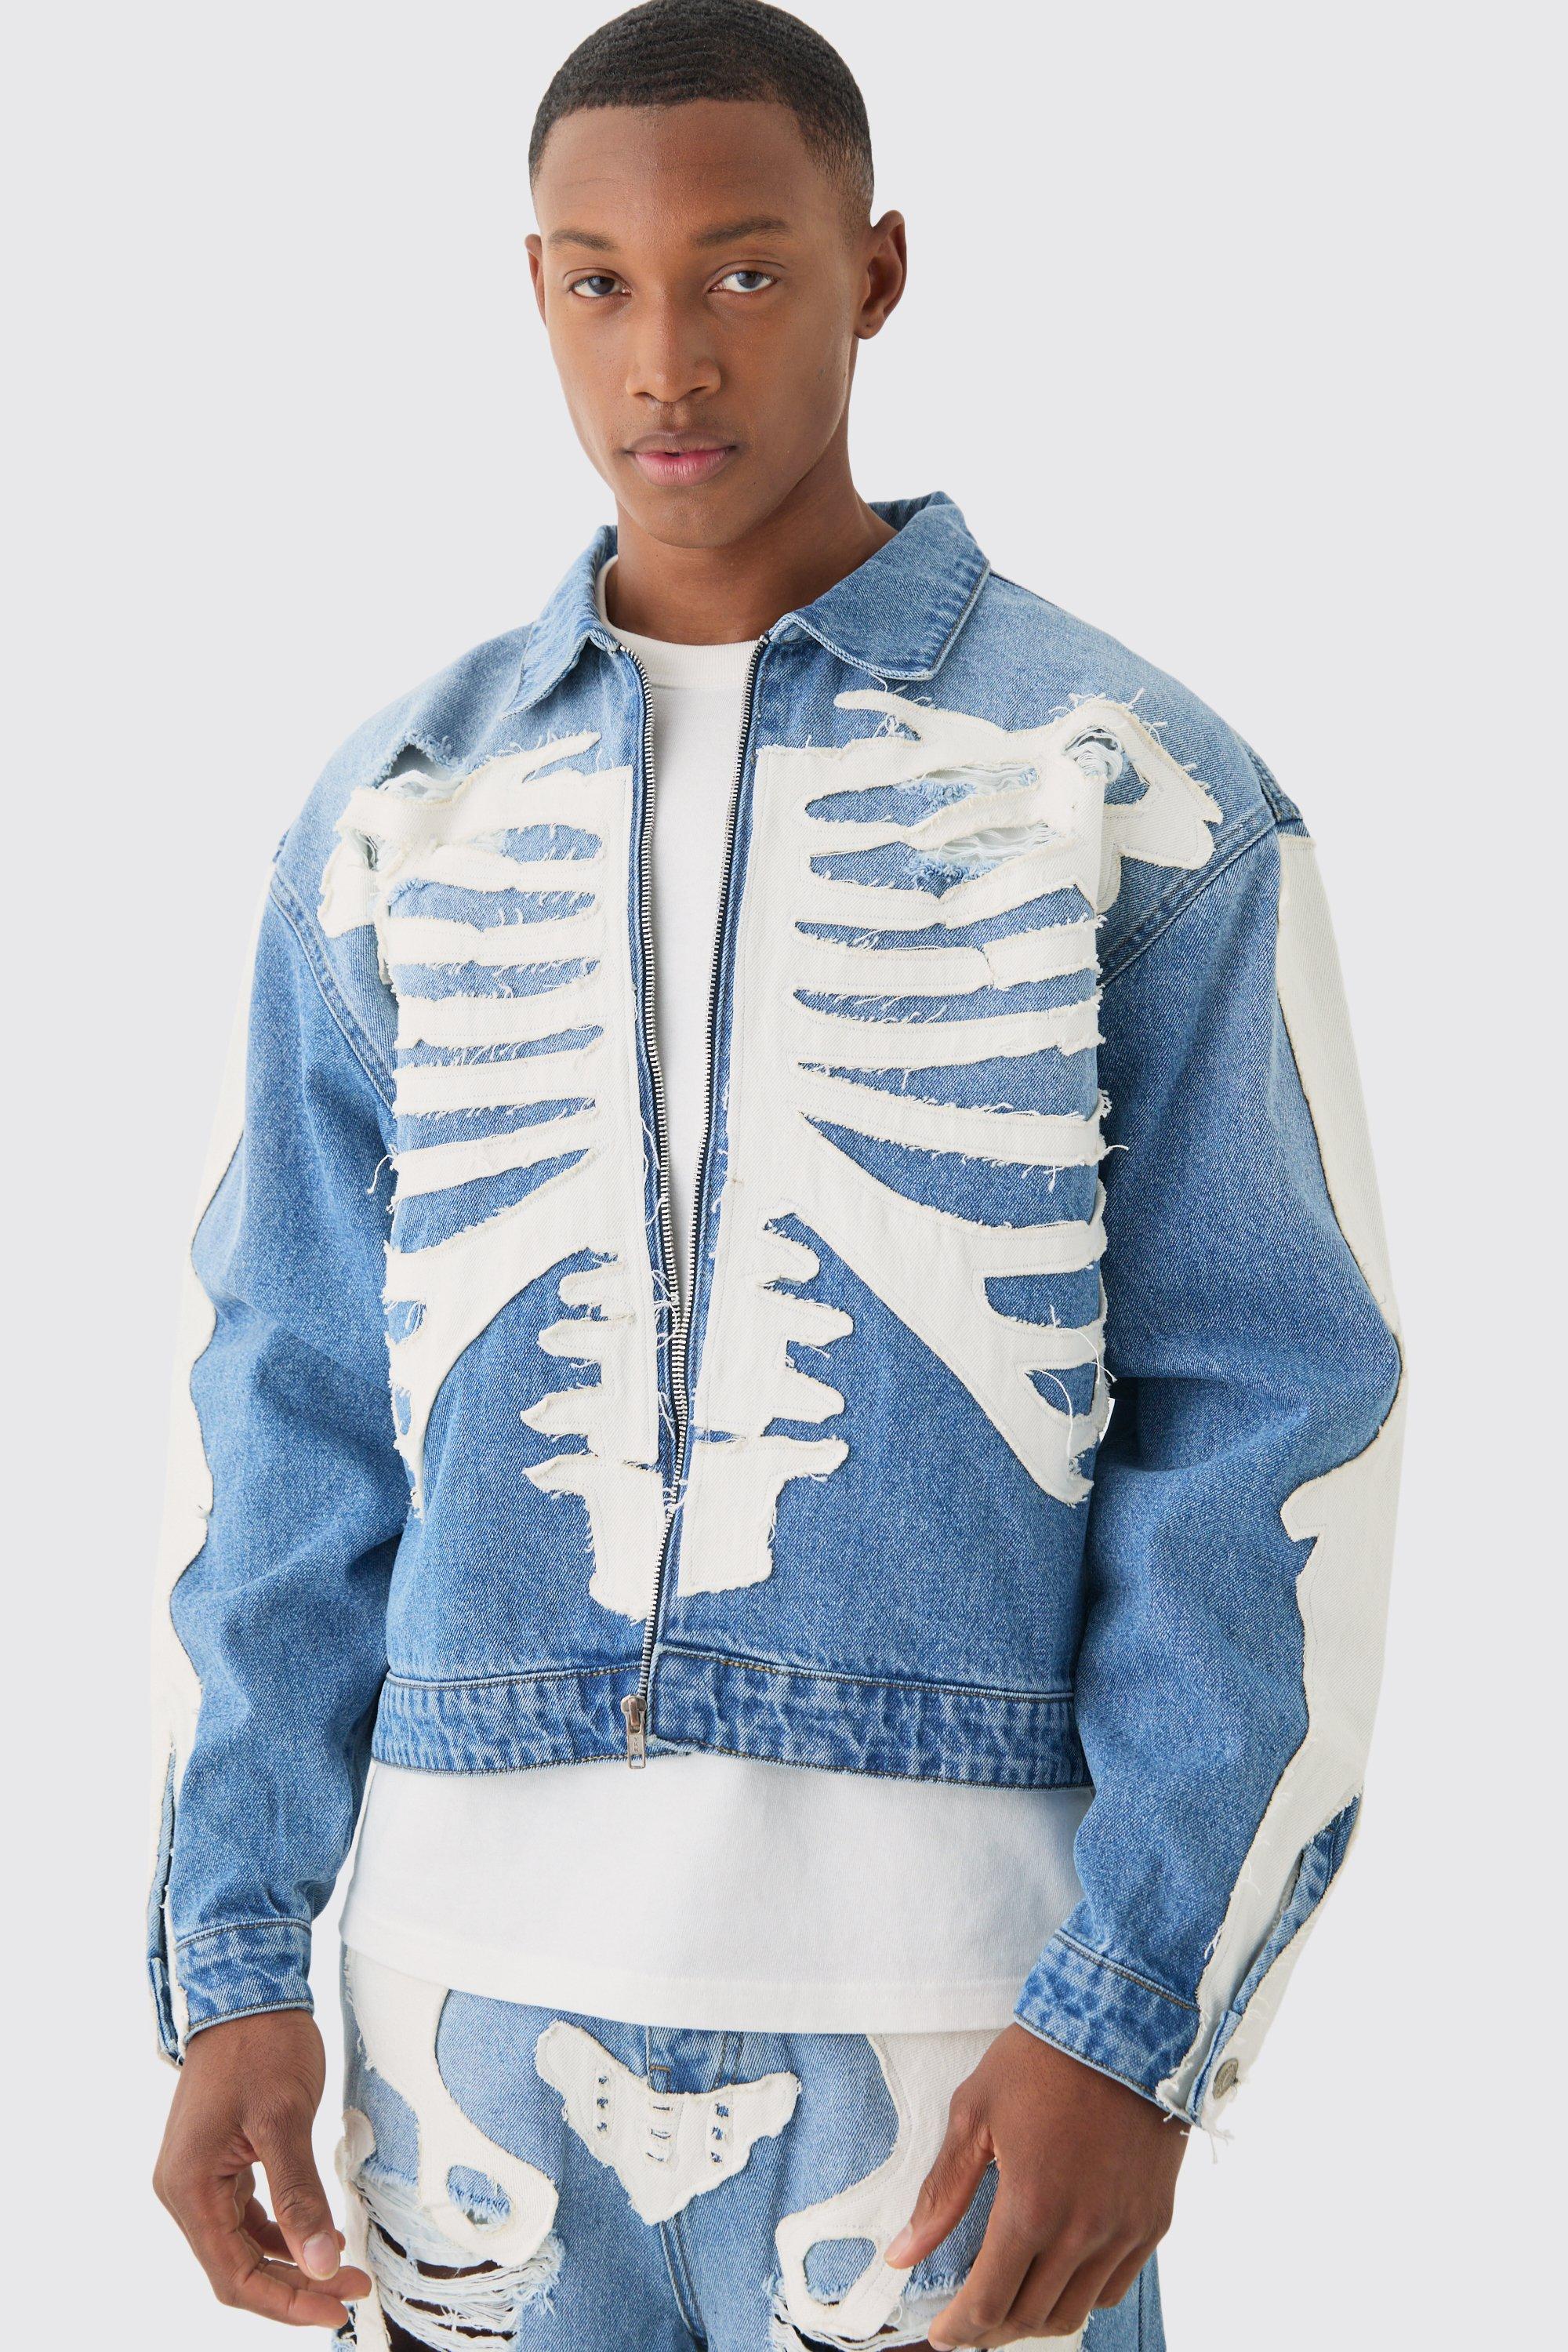 Image of Boxy Fit Skeleton Applique Distressed Denim Jacket In Light Blue, Azzurro